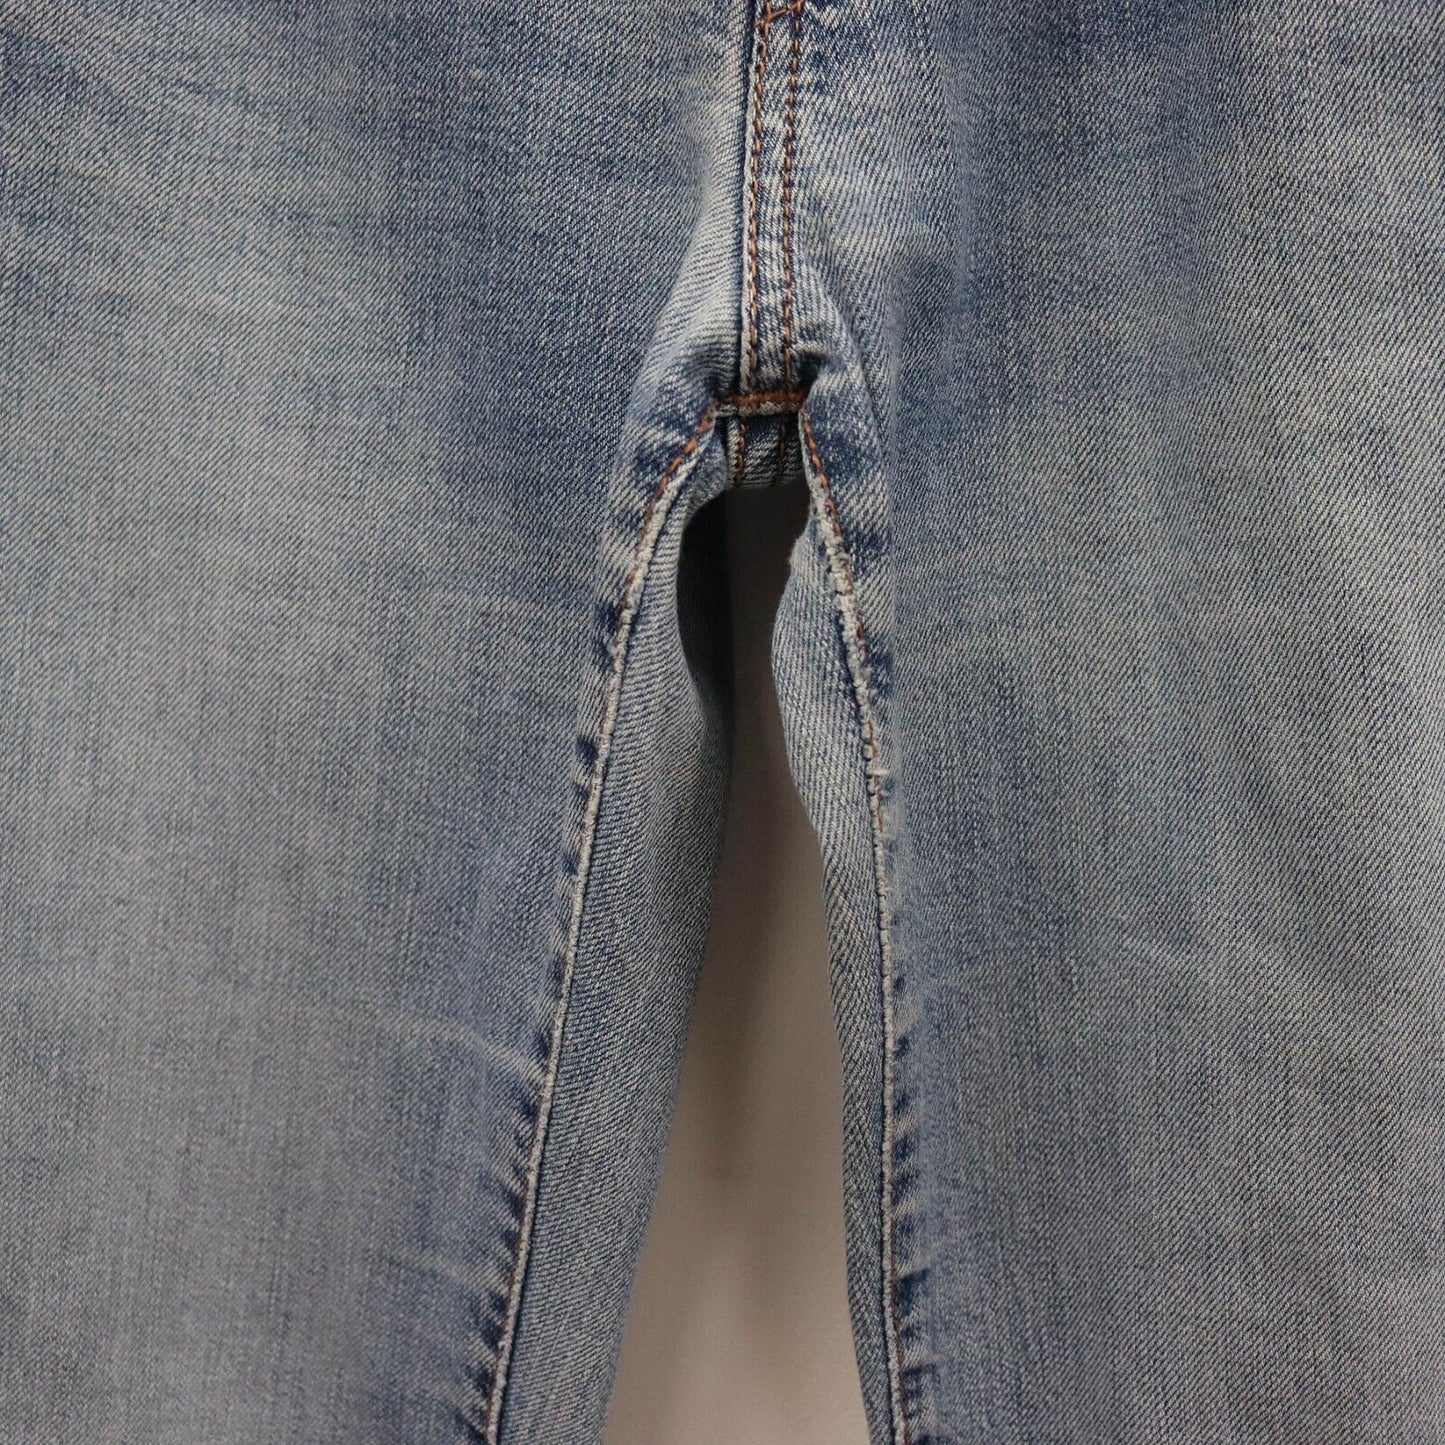 00s Levi’s 525 Bootcut Jeans Size UK10 W28 L30